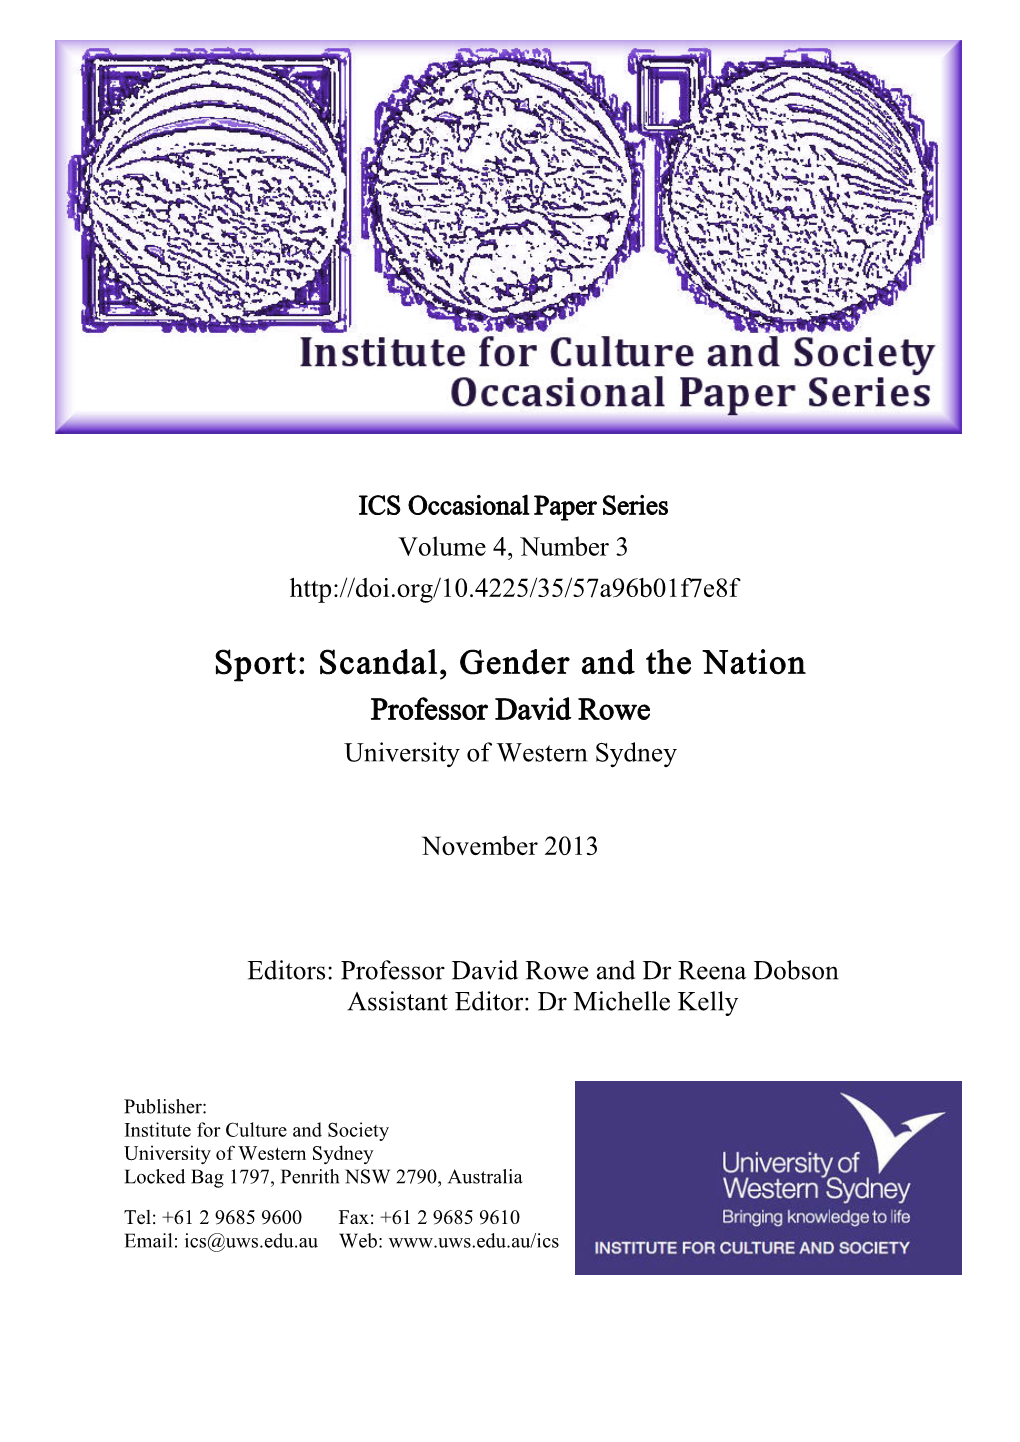 Sport: Scandal, Gender and the Nation Professor David Rowe University of Western Sydney